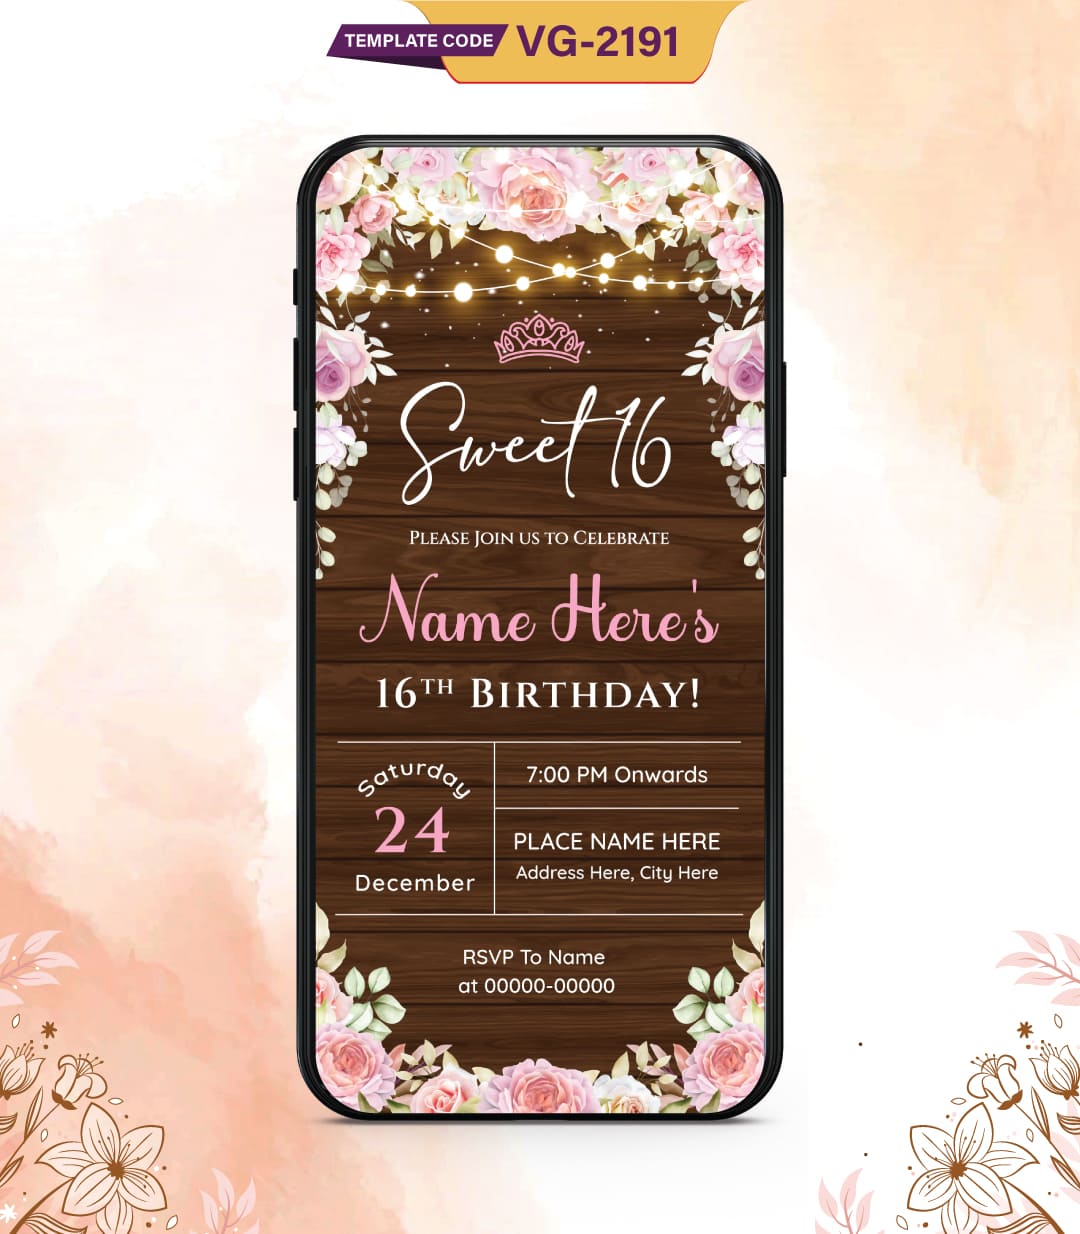 Sweet 16 Birthday Invitation Card